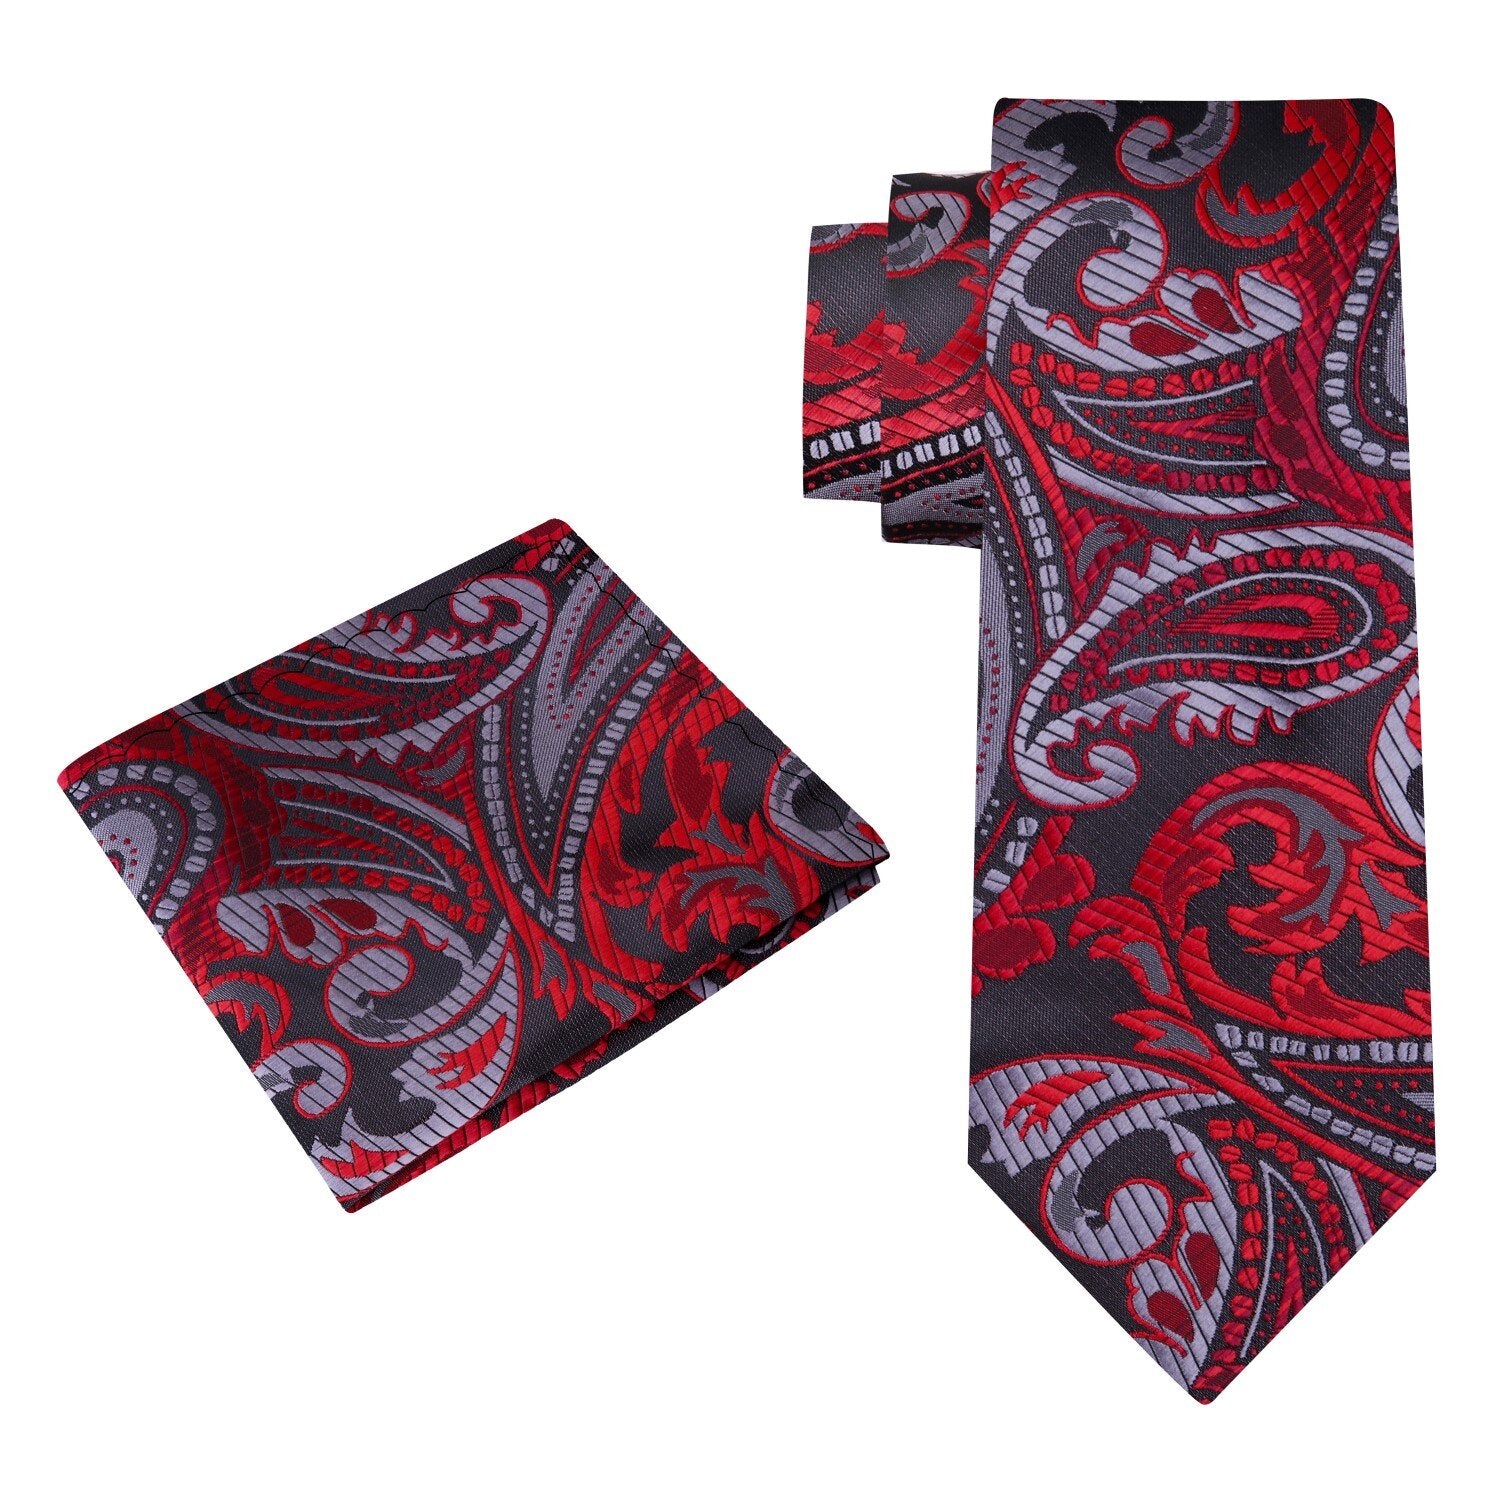 Dark Red Paisley Tie